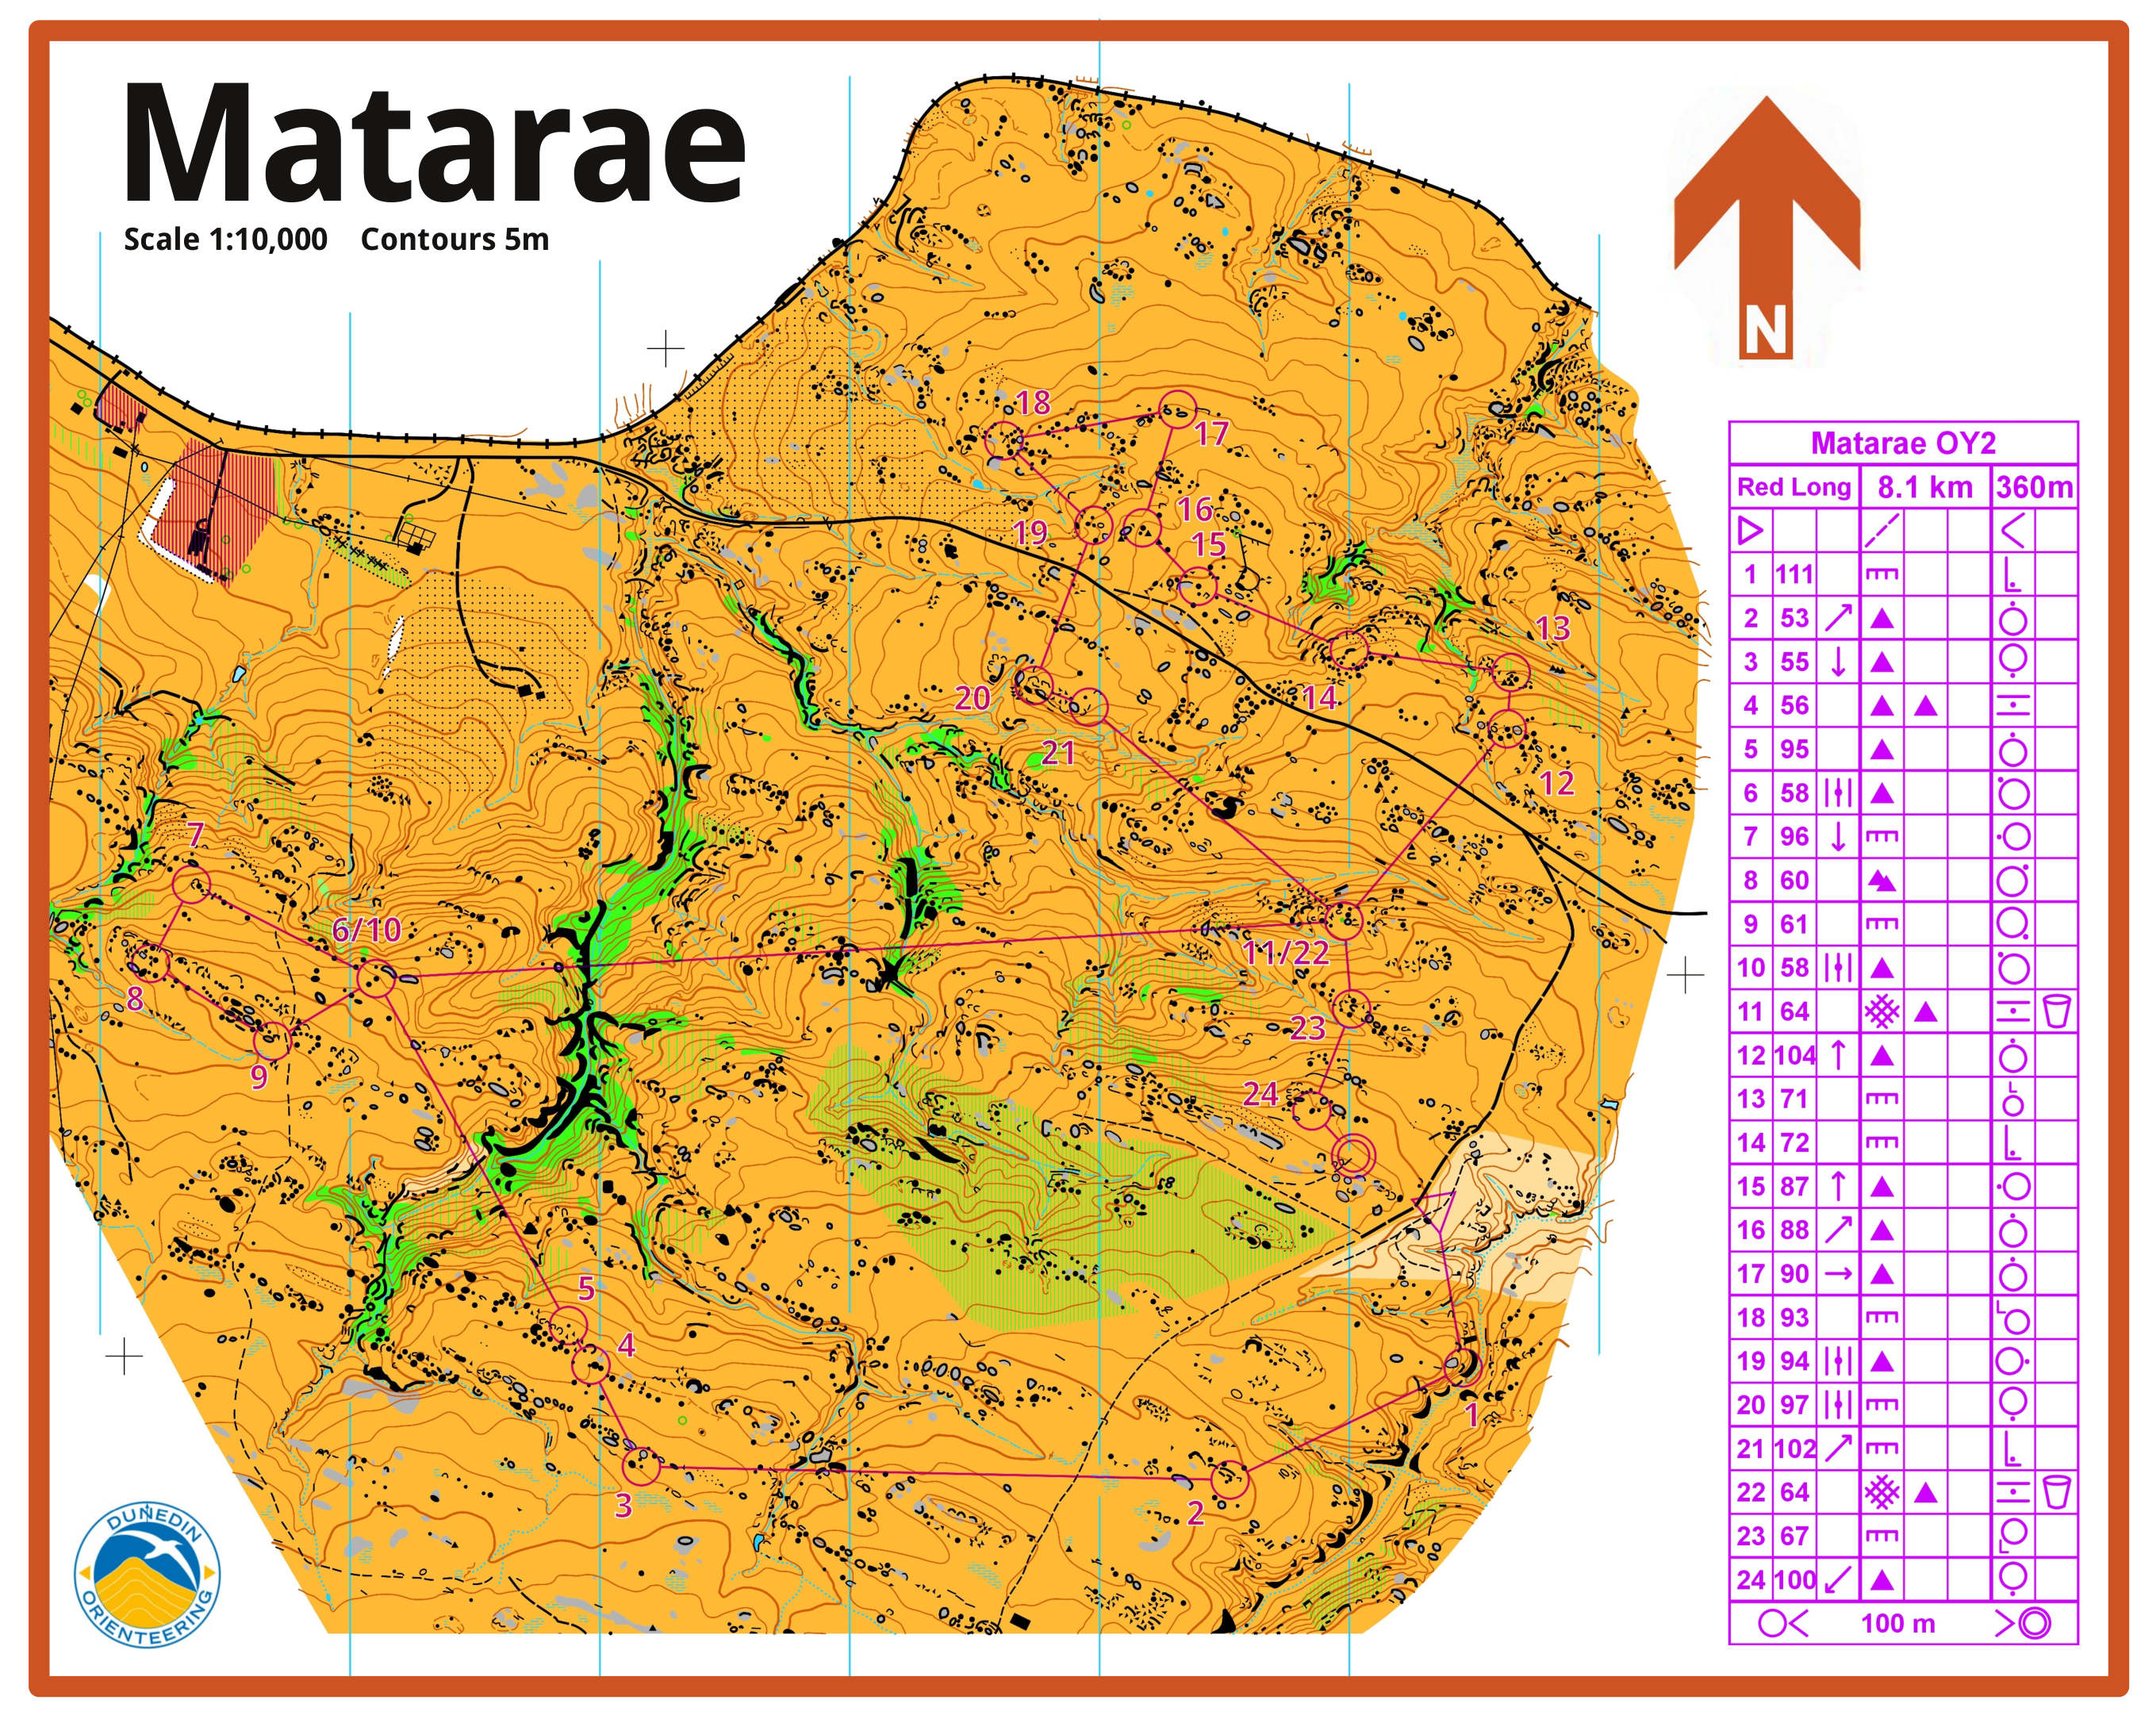 Matarae OY2 (17.05.2015)